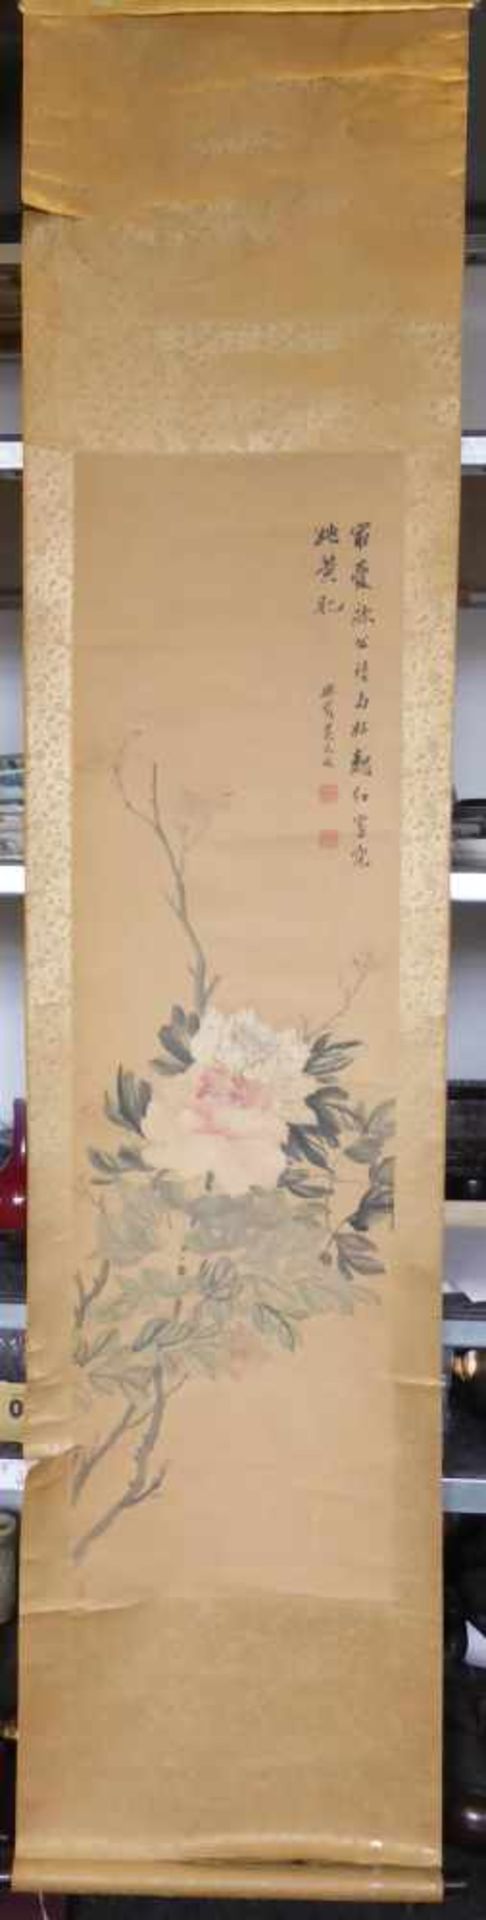 WU, XIZAI1799 Jiangsu - 1870 - zugeschrieben. Peonies. China. 19th c. Ink and light colors on paper. - Bild 2 aus 3